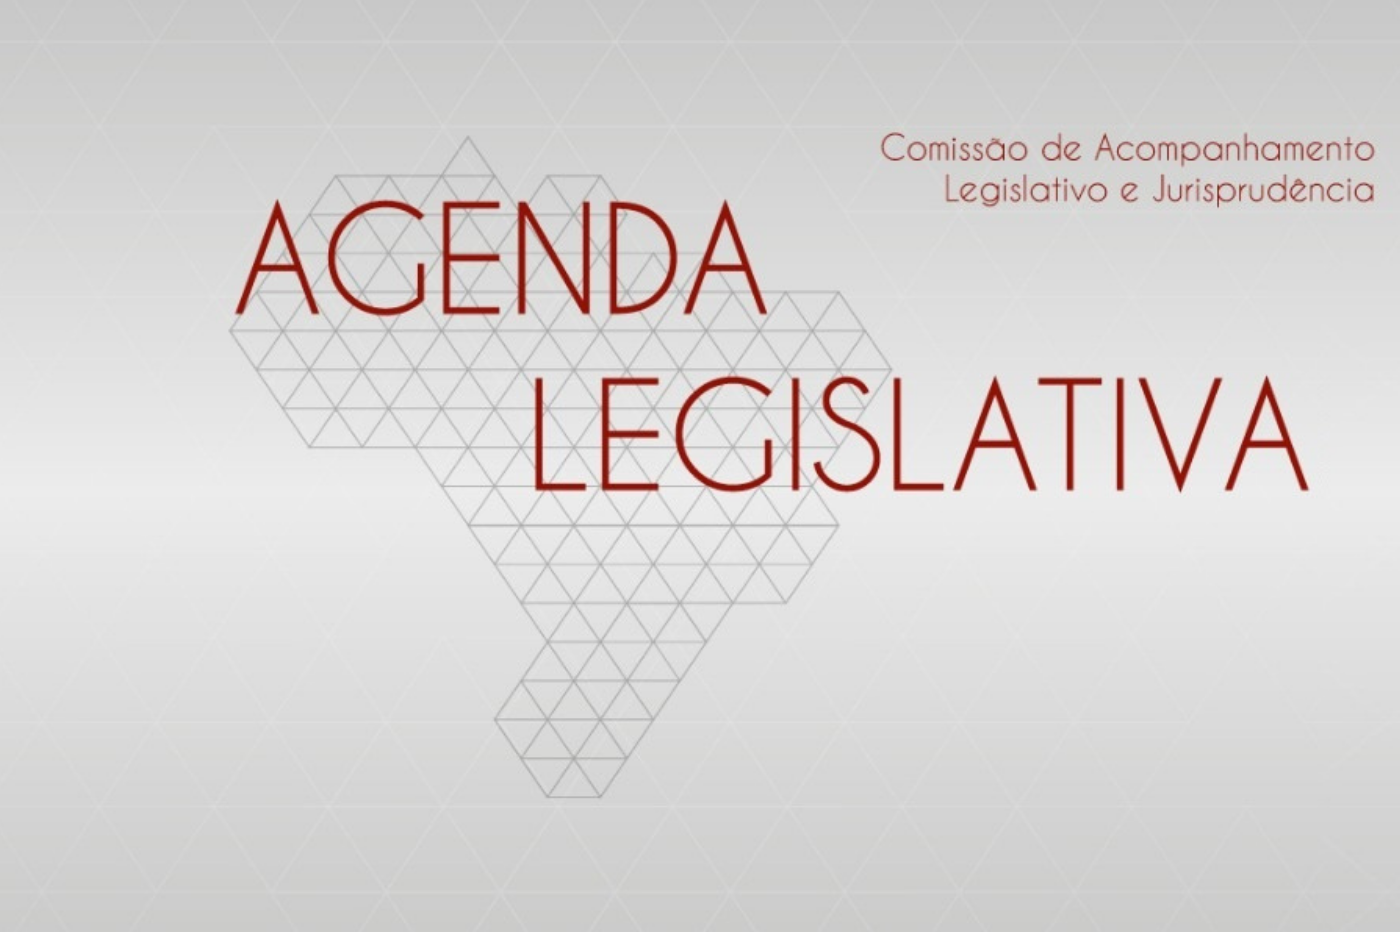 agenda_legislativa.png - 543,08 kB